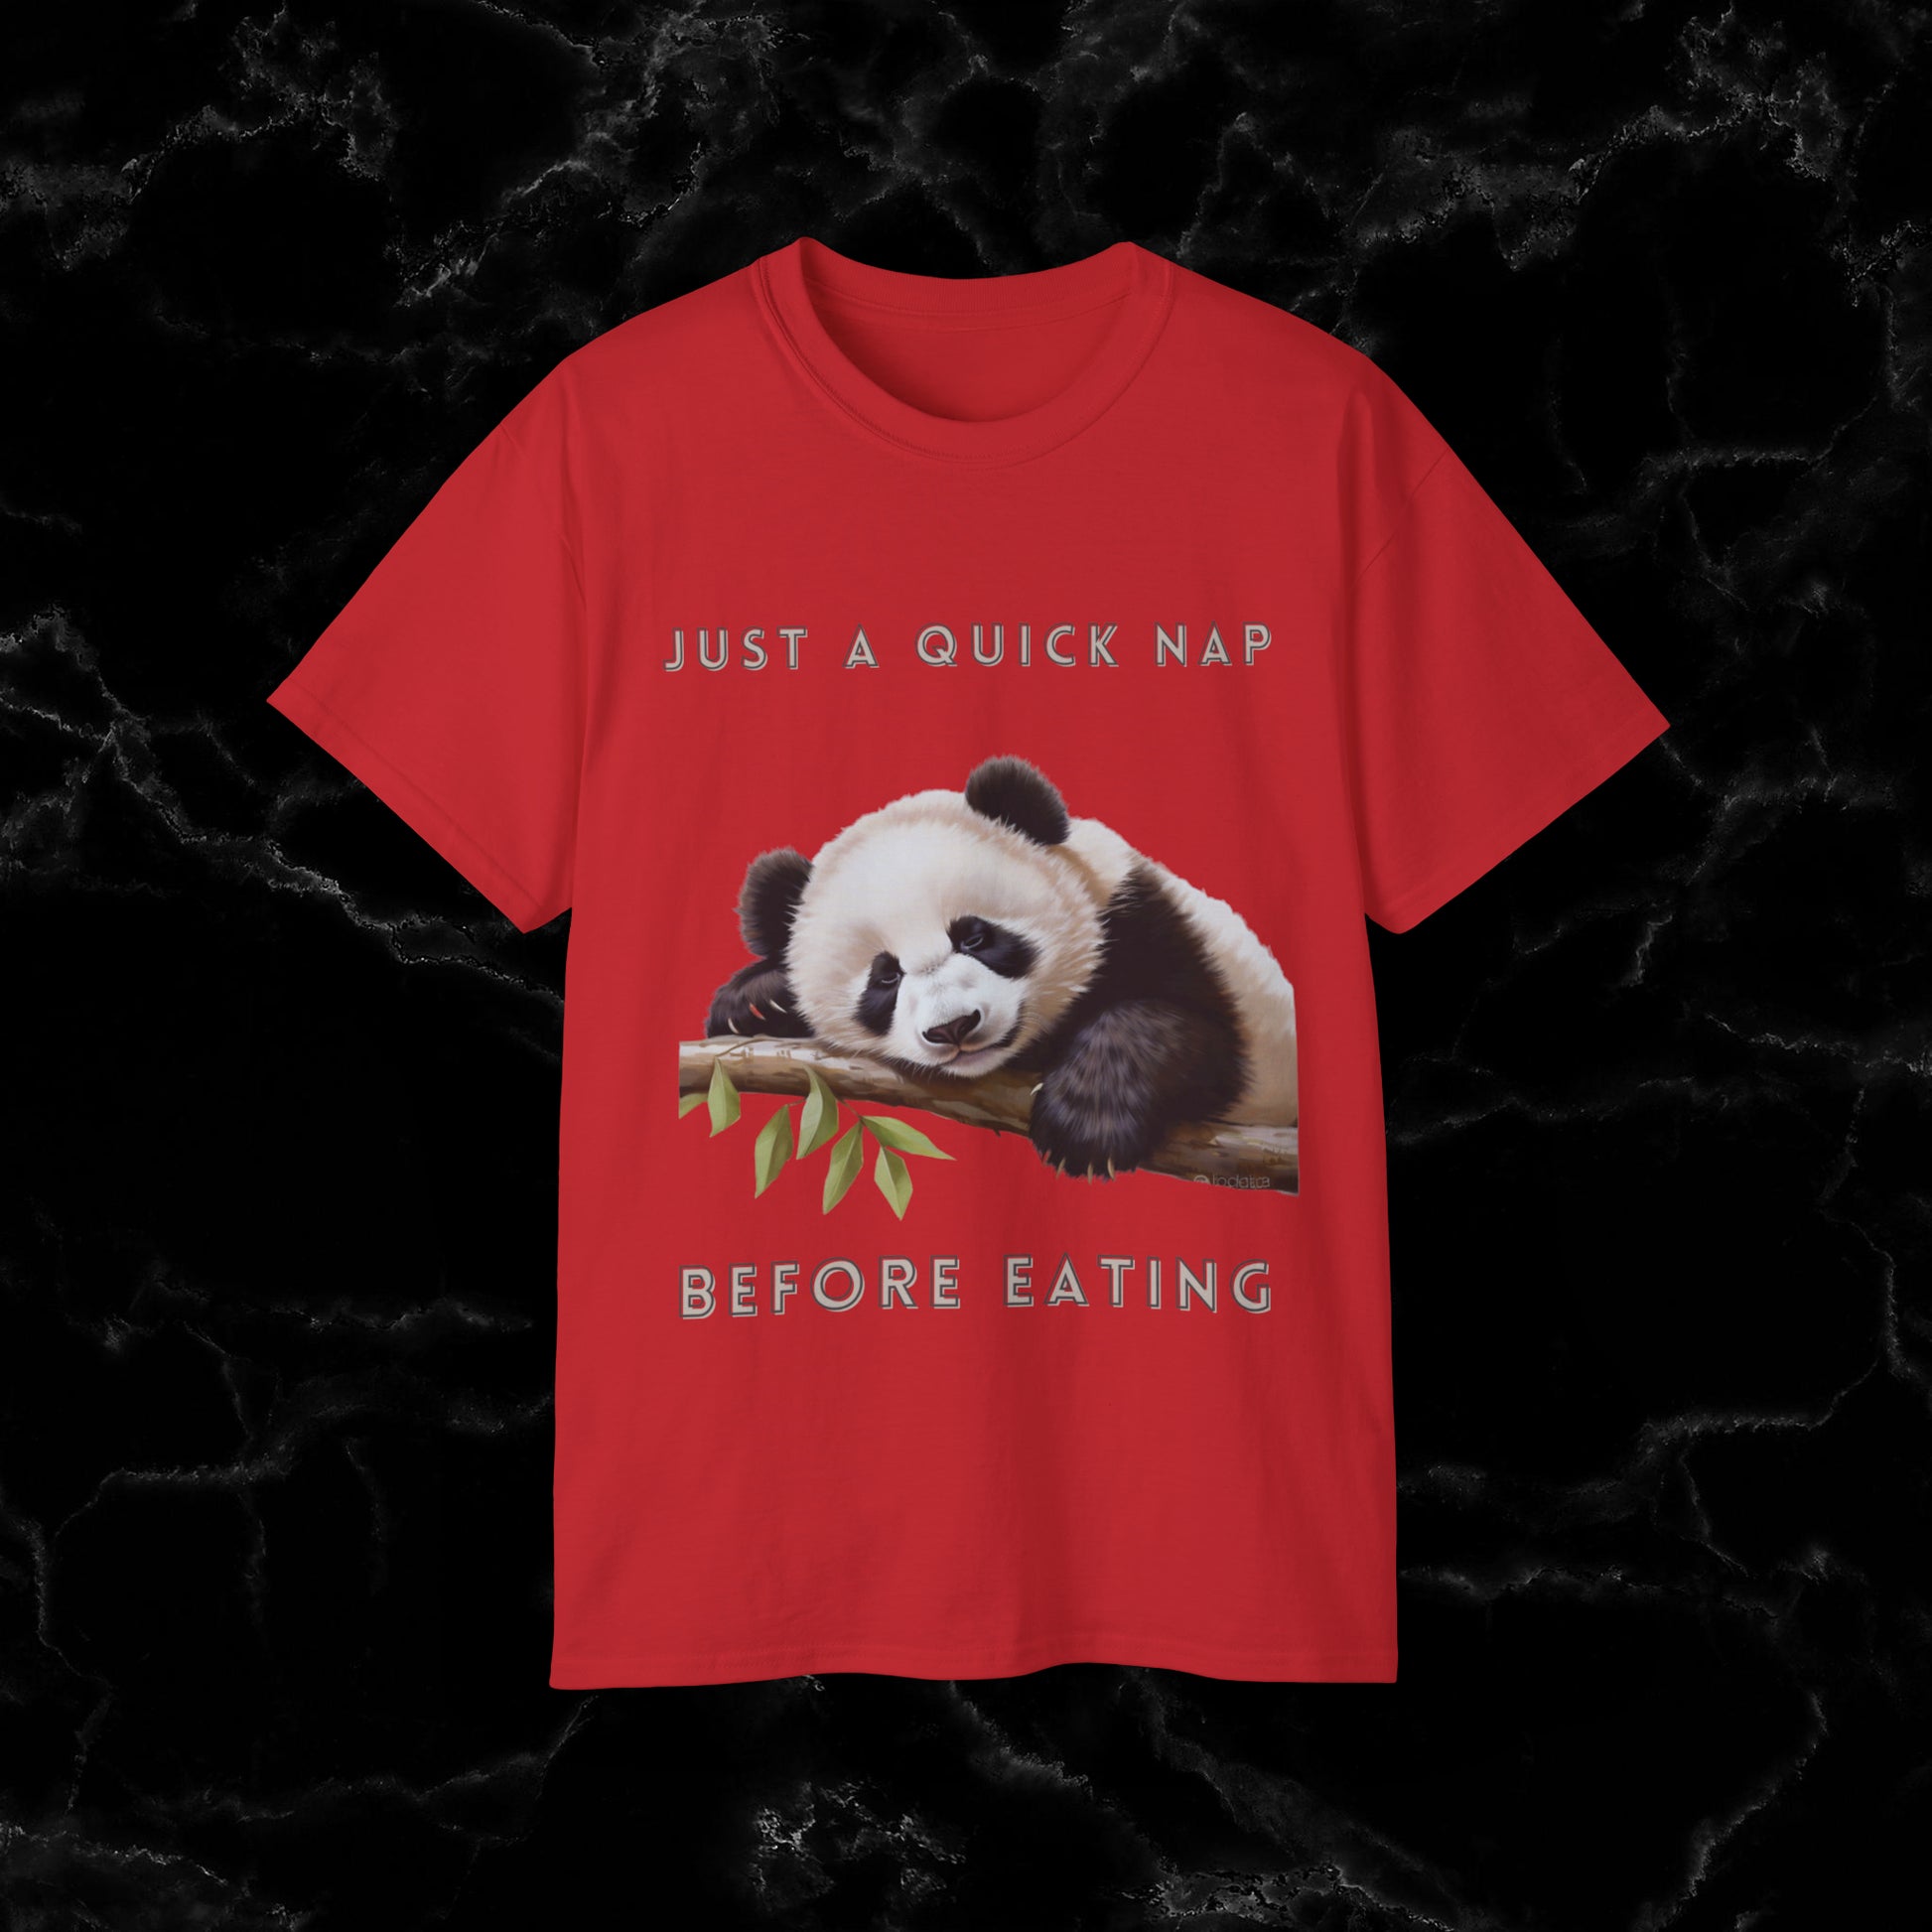 Nap Time Panda Unisex Funny Tee - Hilarious Panda Nap Design - Just a Quick Nap Before Eating T-Shirt Red L 